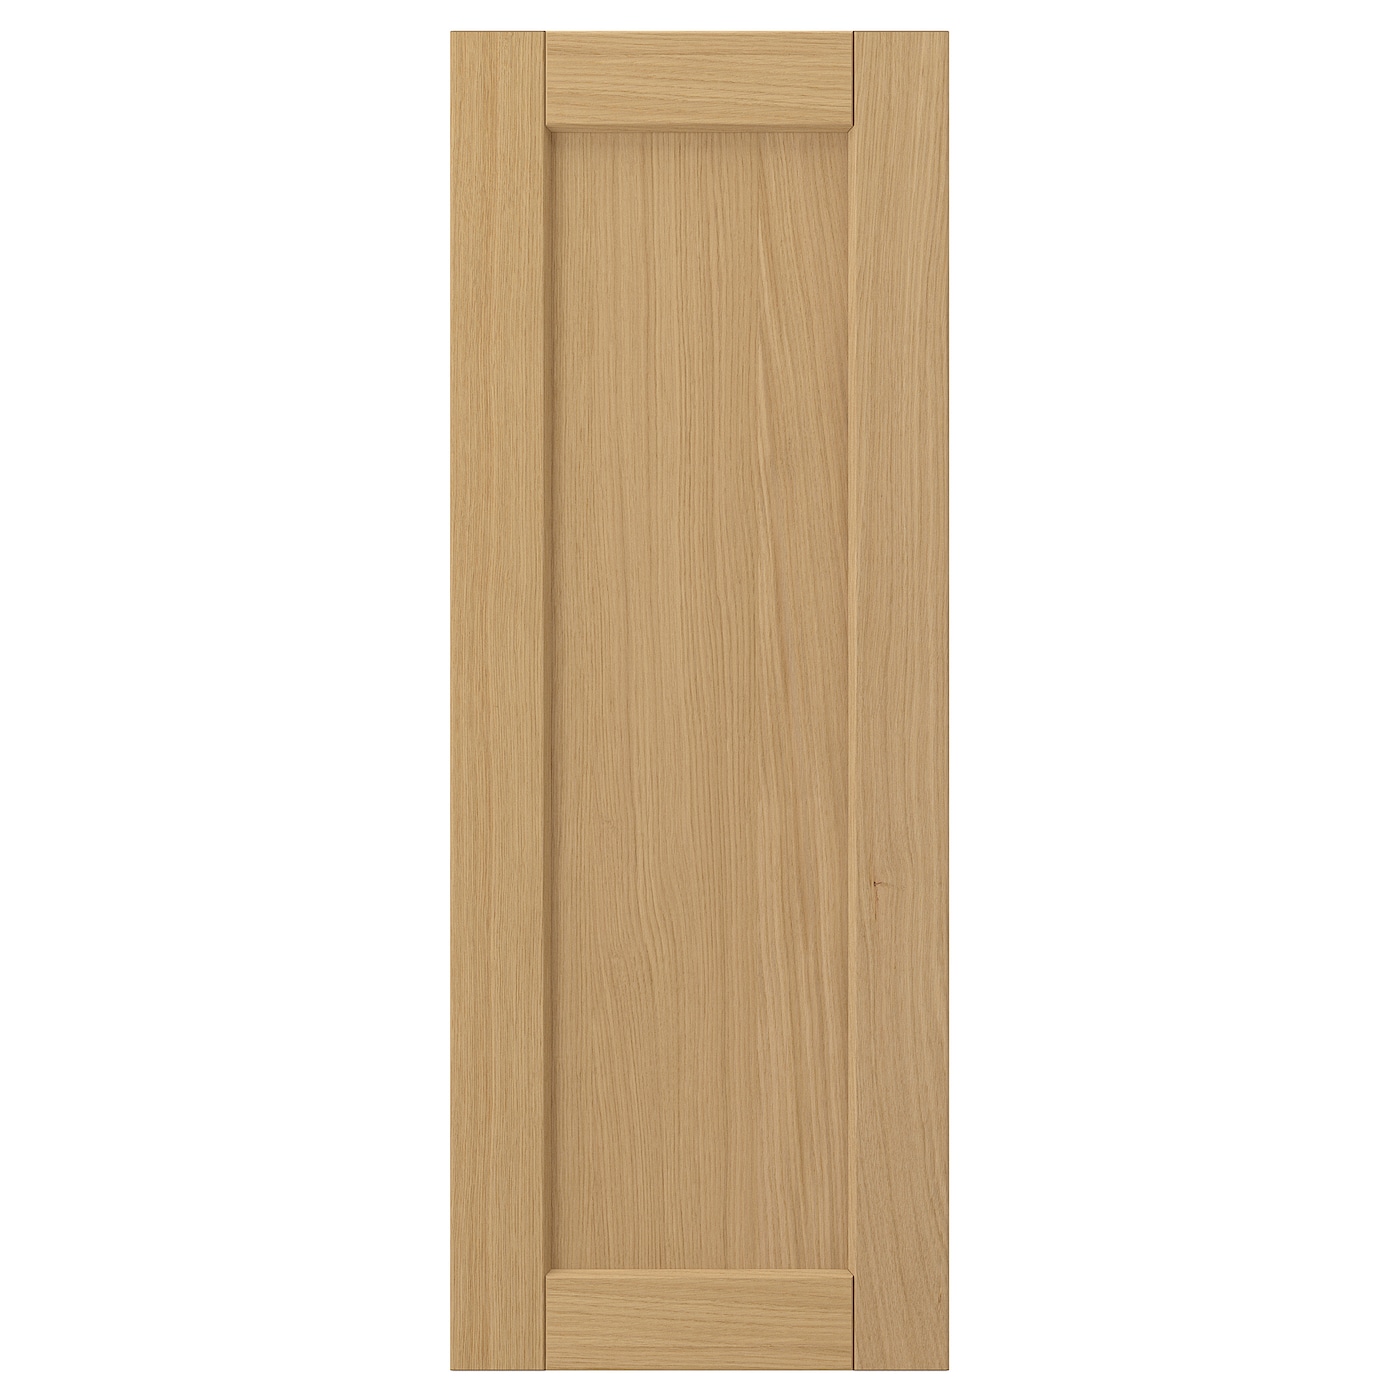 Дверца - FORSBACKA IKEA/ ФОРСБАКА ИКЕА,  80х30 см, под беленый дуб